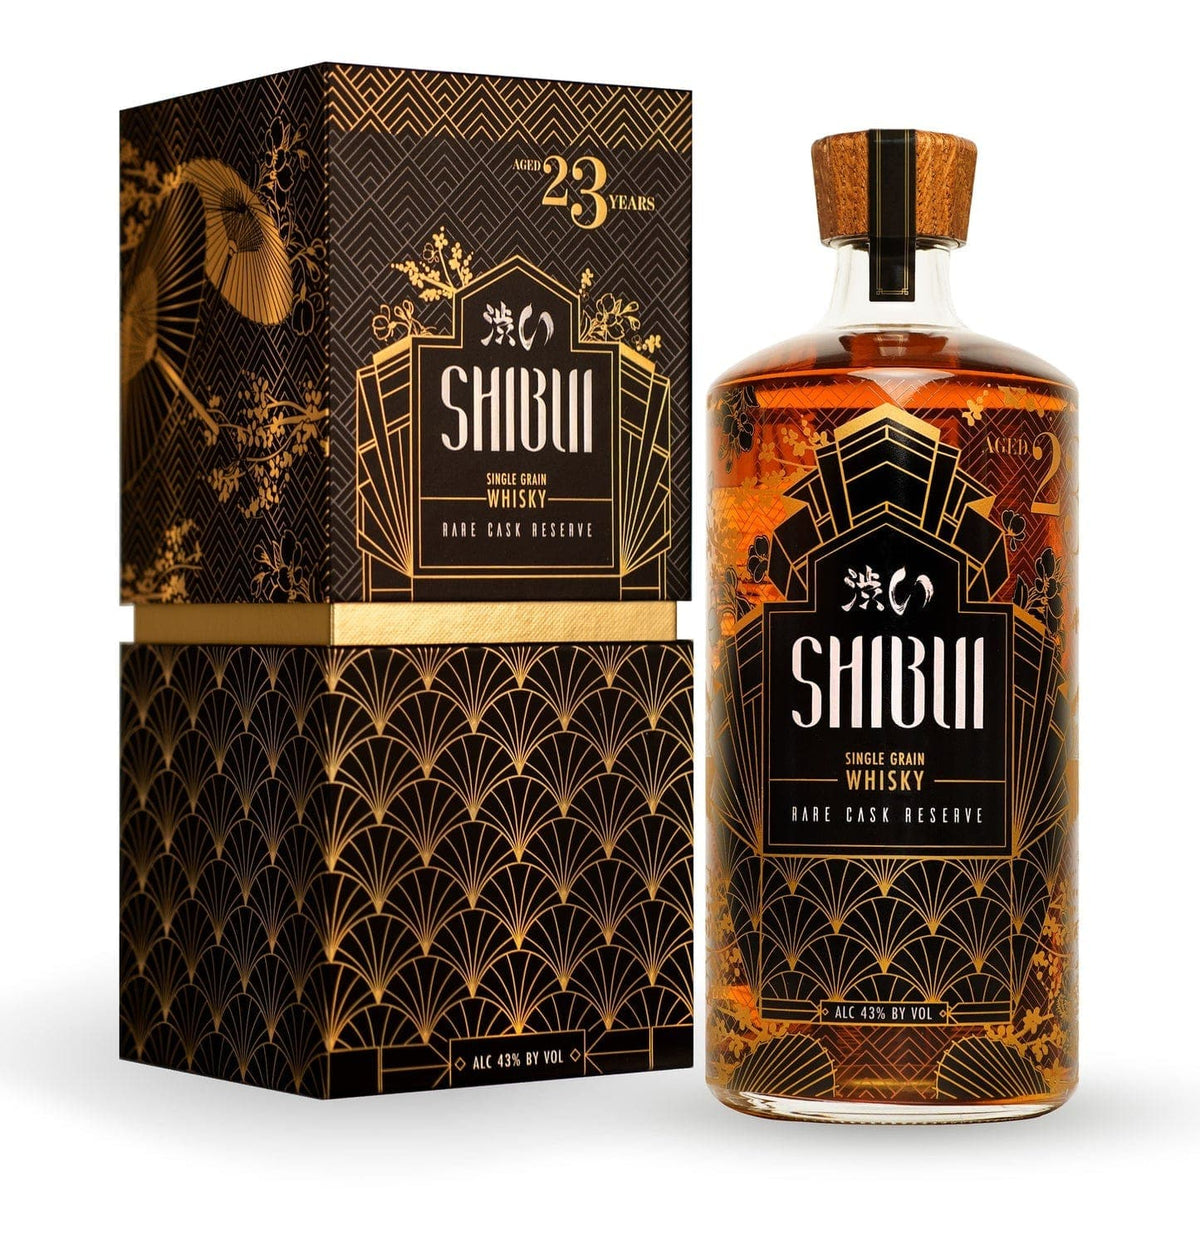 Shibui 23 Year Japanese Rare Cask Reserve Whisky - Barbank